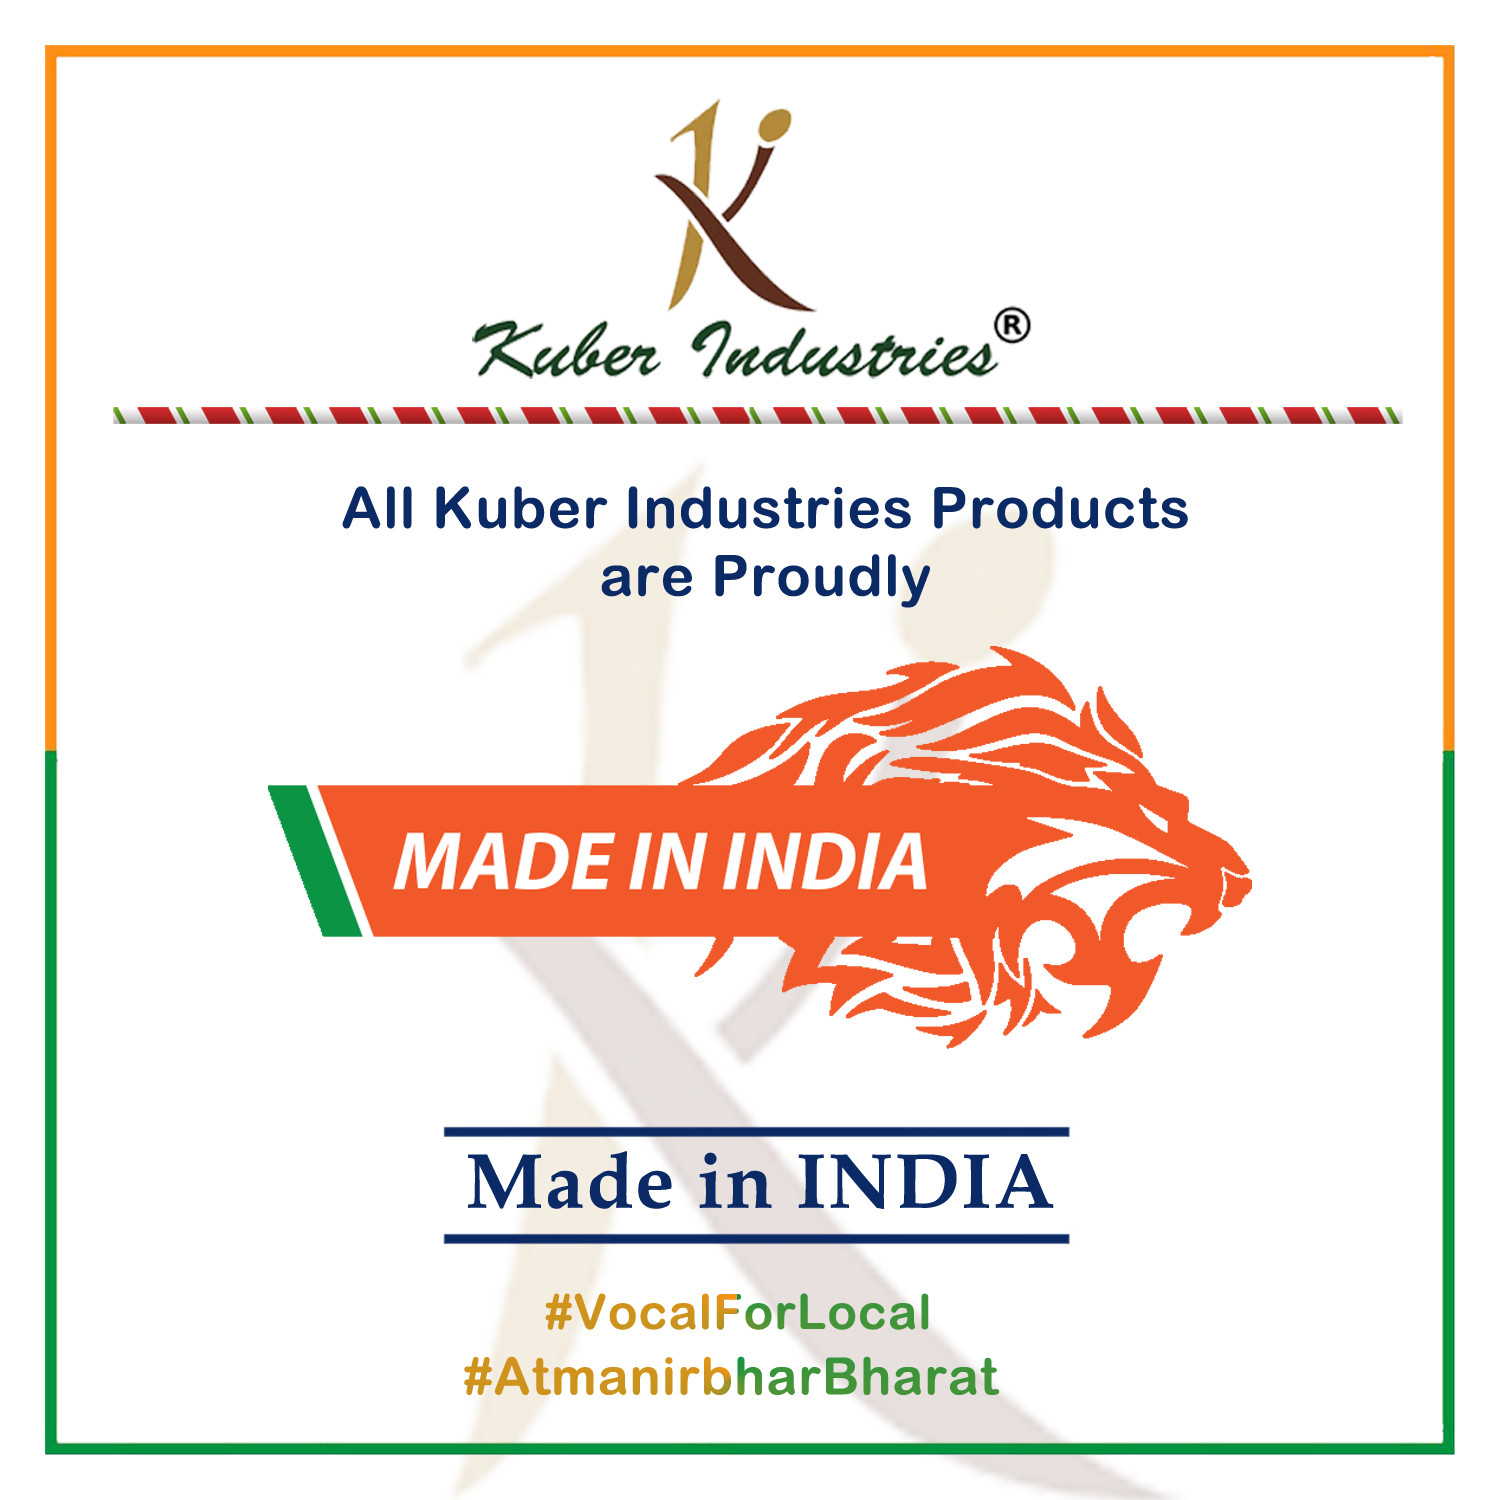 Kuber Industries Flower Printed Unbreakable Multipurpose Plastic Water Jug/Pitcher With Lid, 2.4 Ltr. (Orange)-HS42KUBMART25245